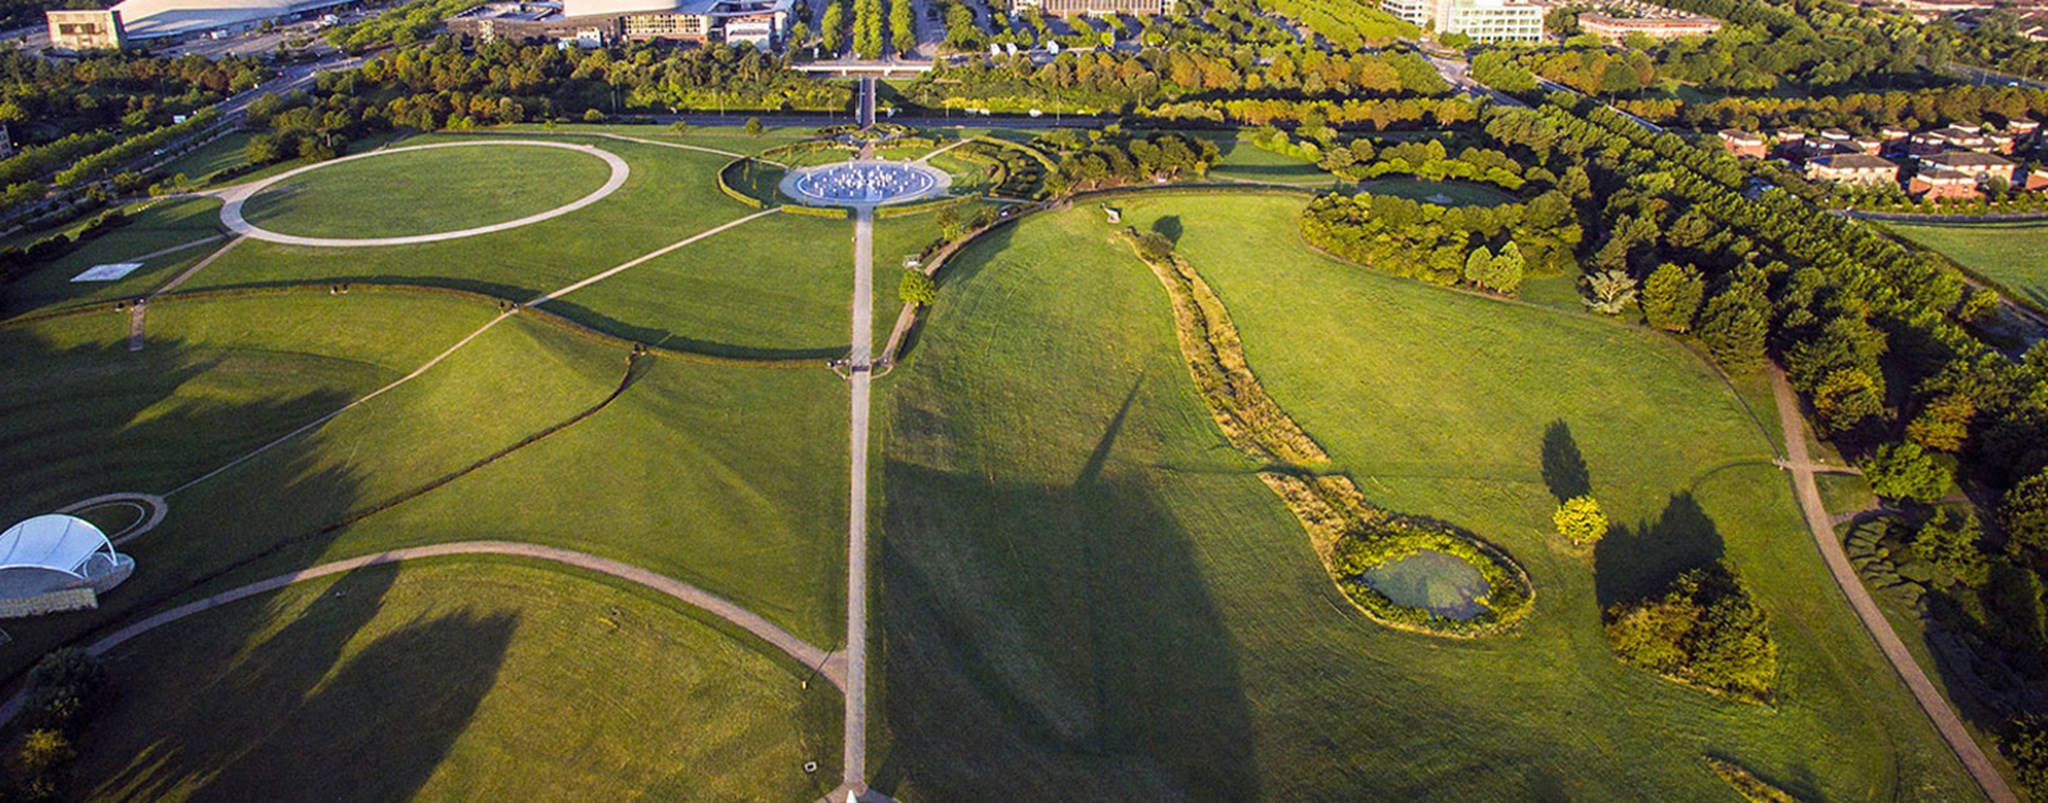 Campbell-Park-drone-view-beacon-pond-mk-rose.jpg (1)